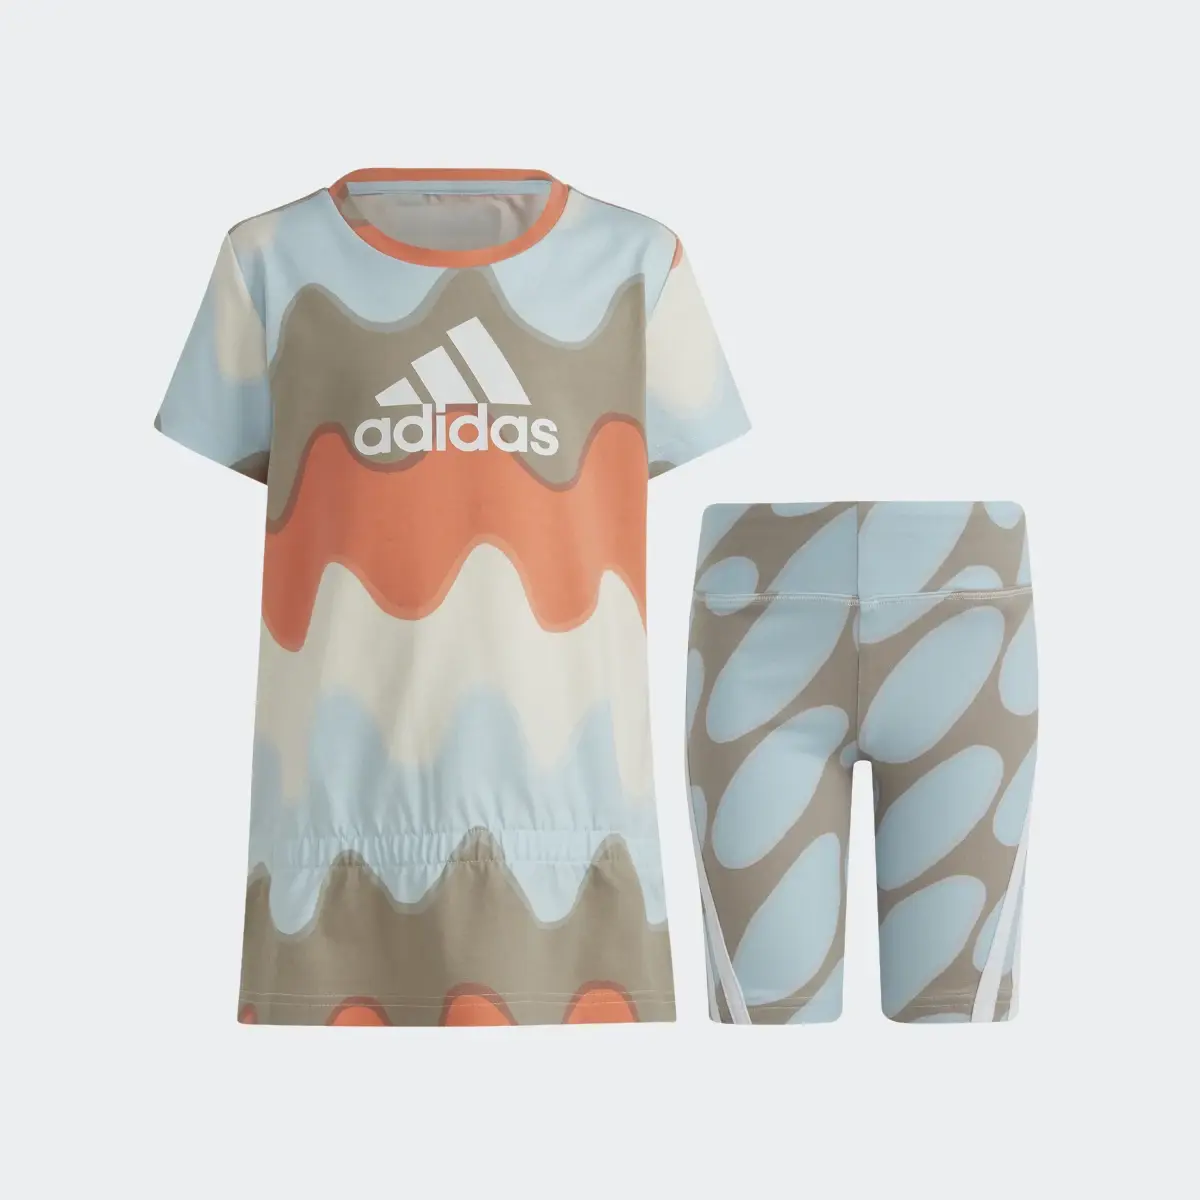 Adidas x Marimekko Allover Print Cotton Set. 1